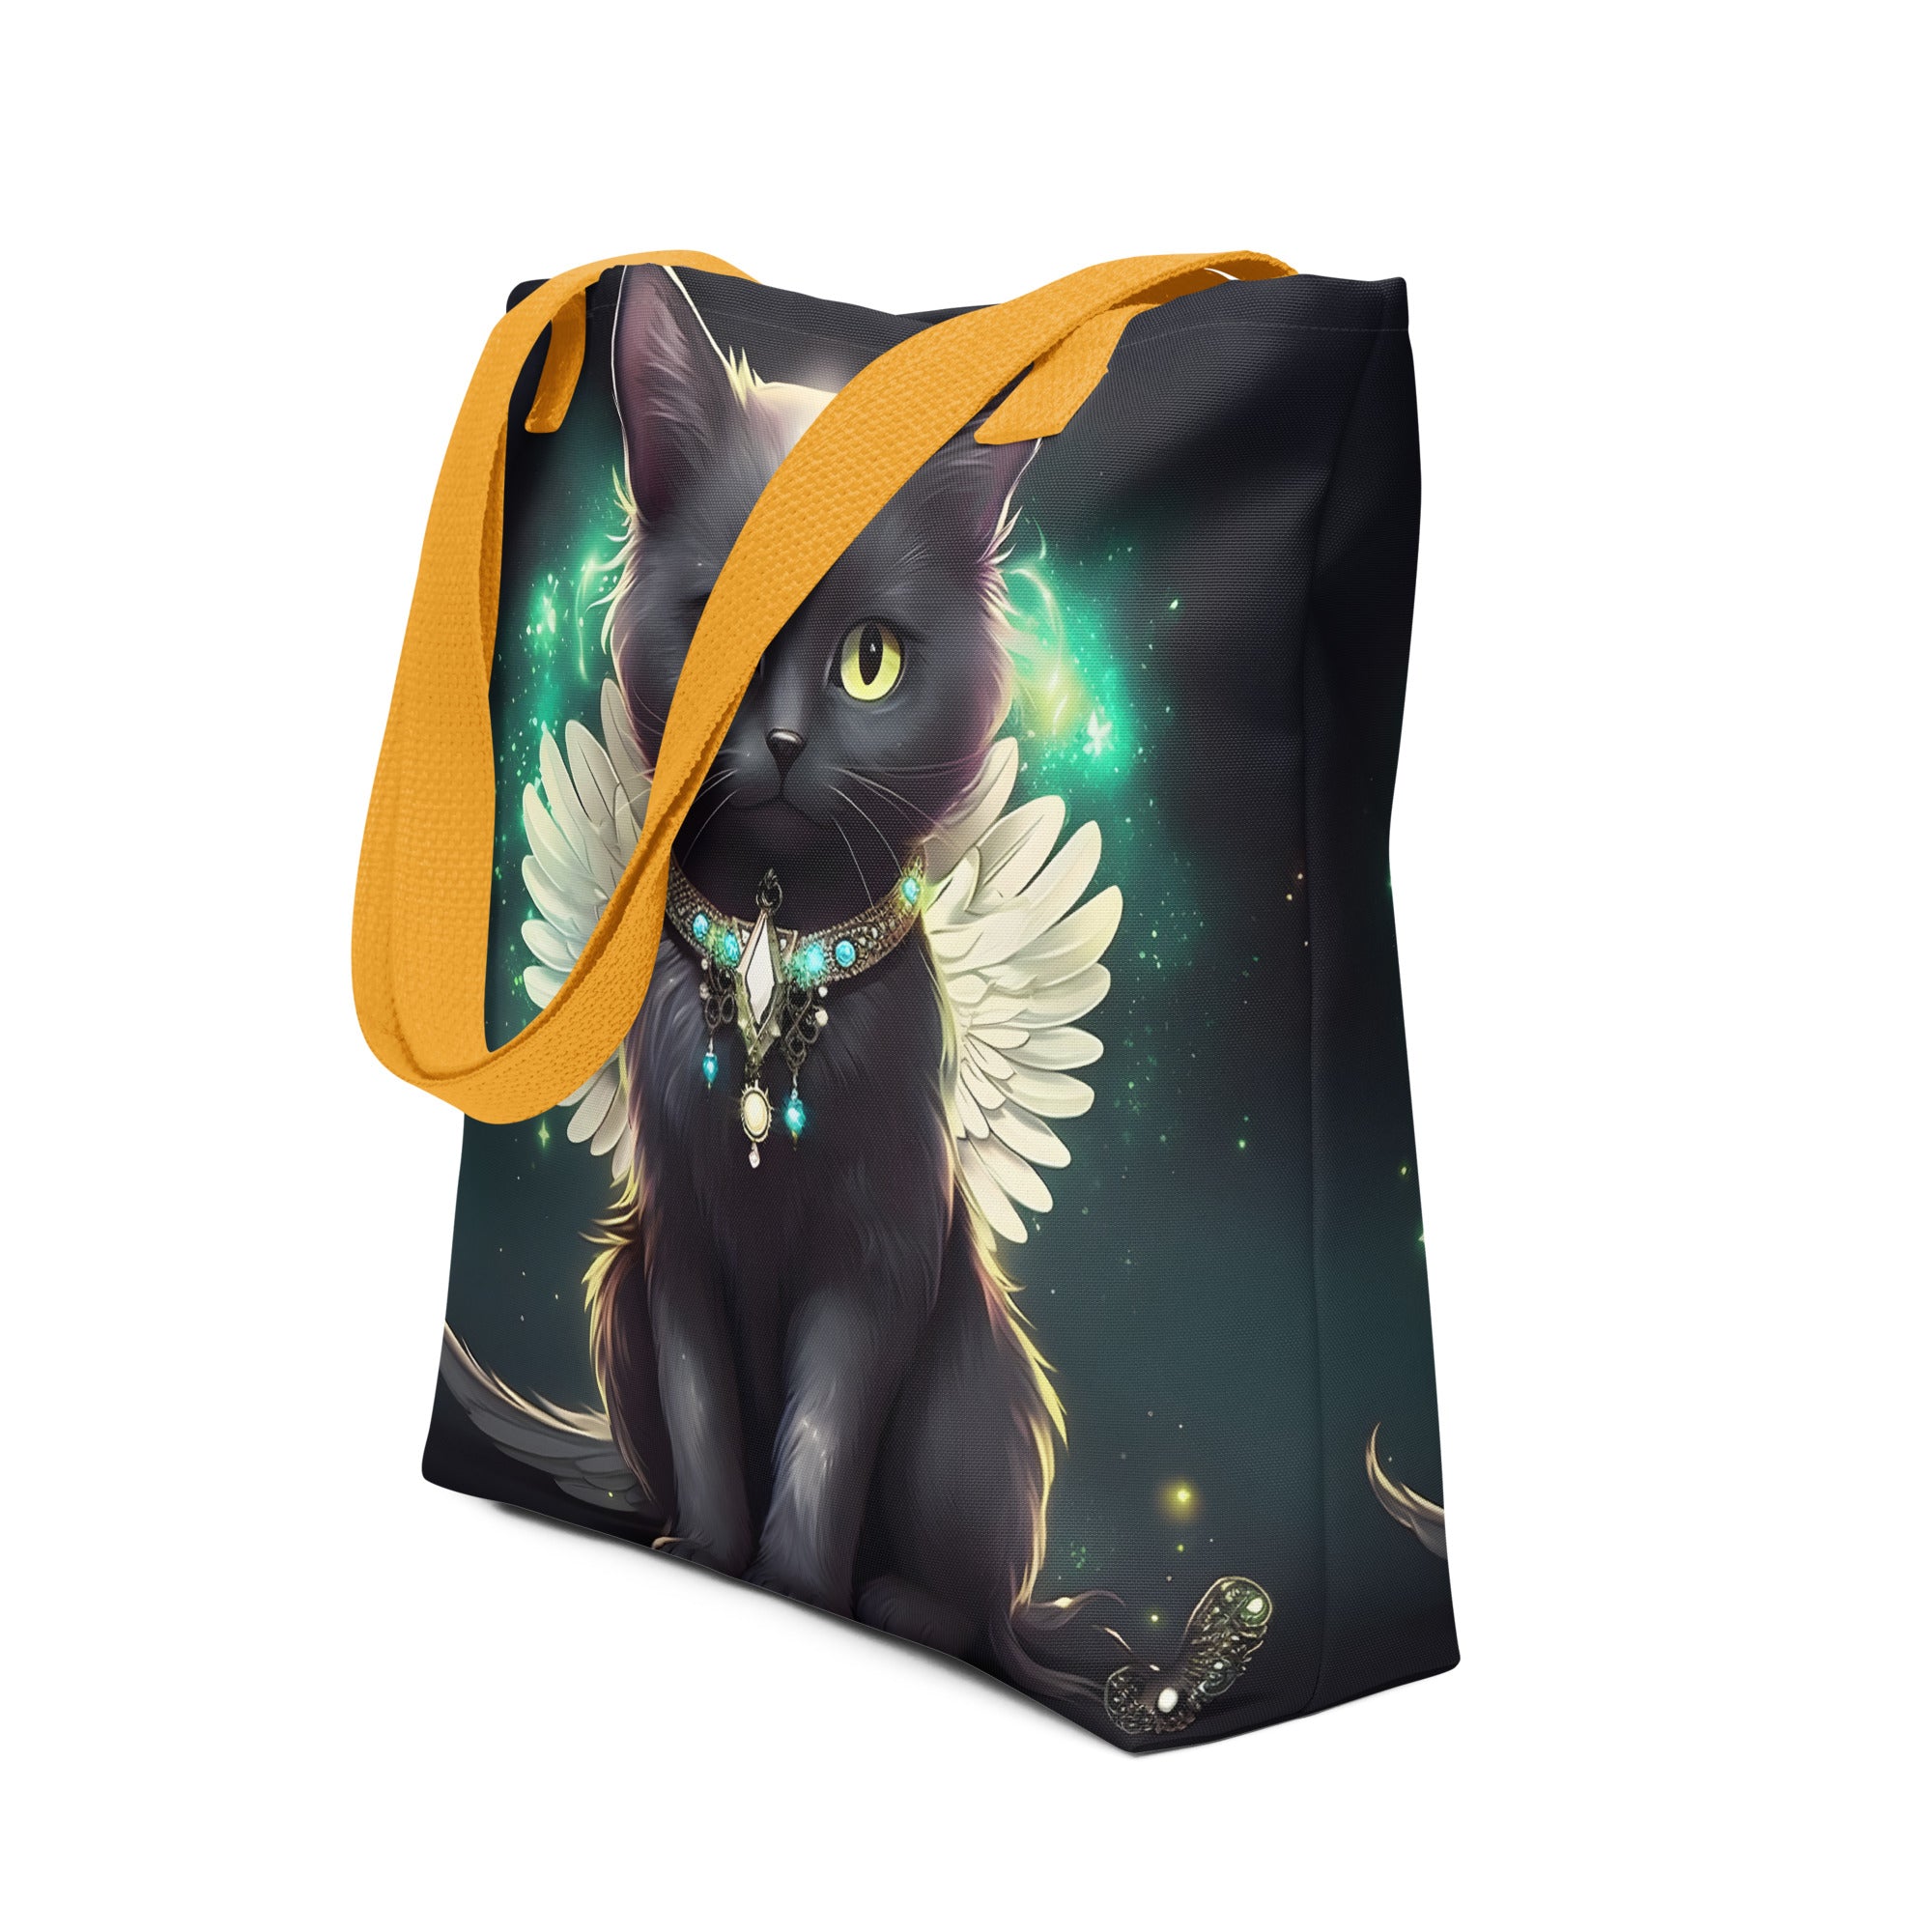 Angel Black Kitty Tote Bag